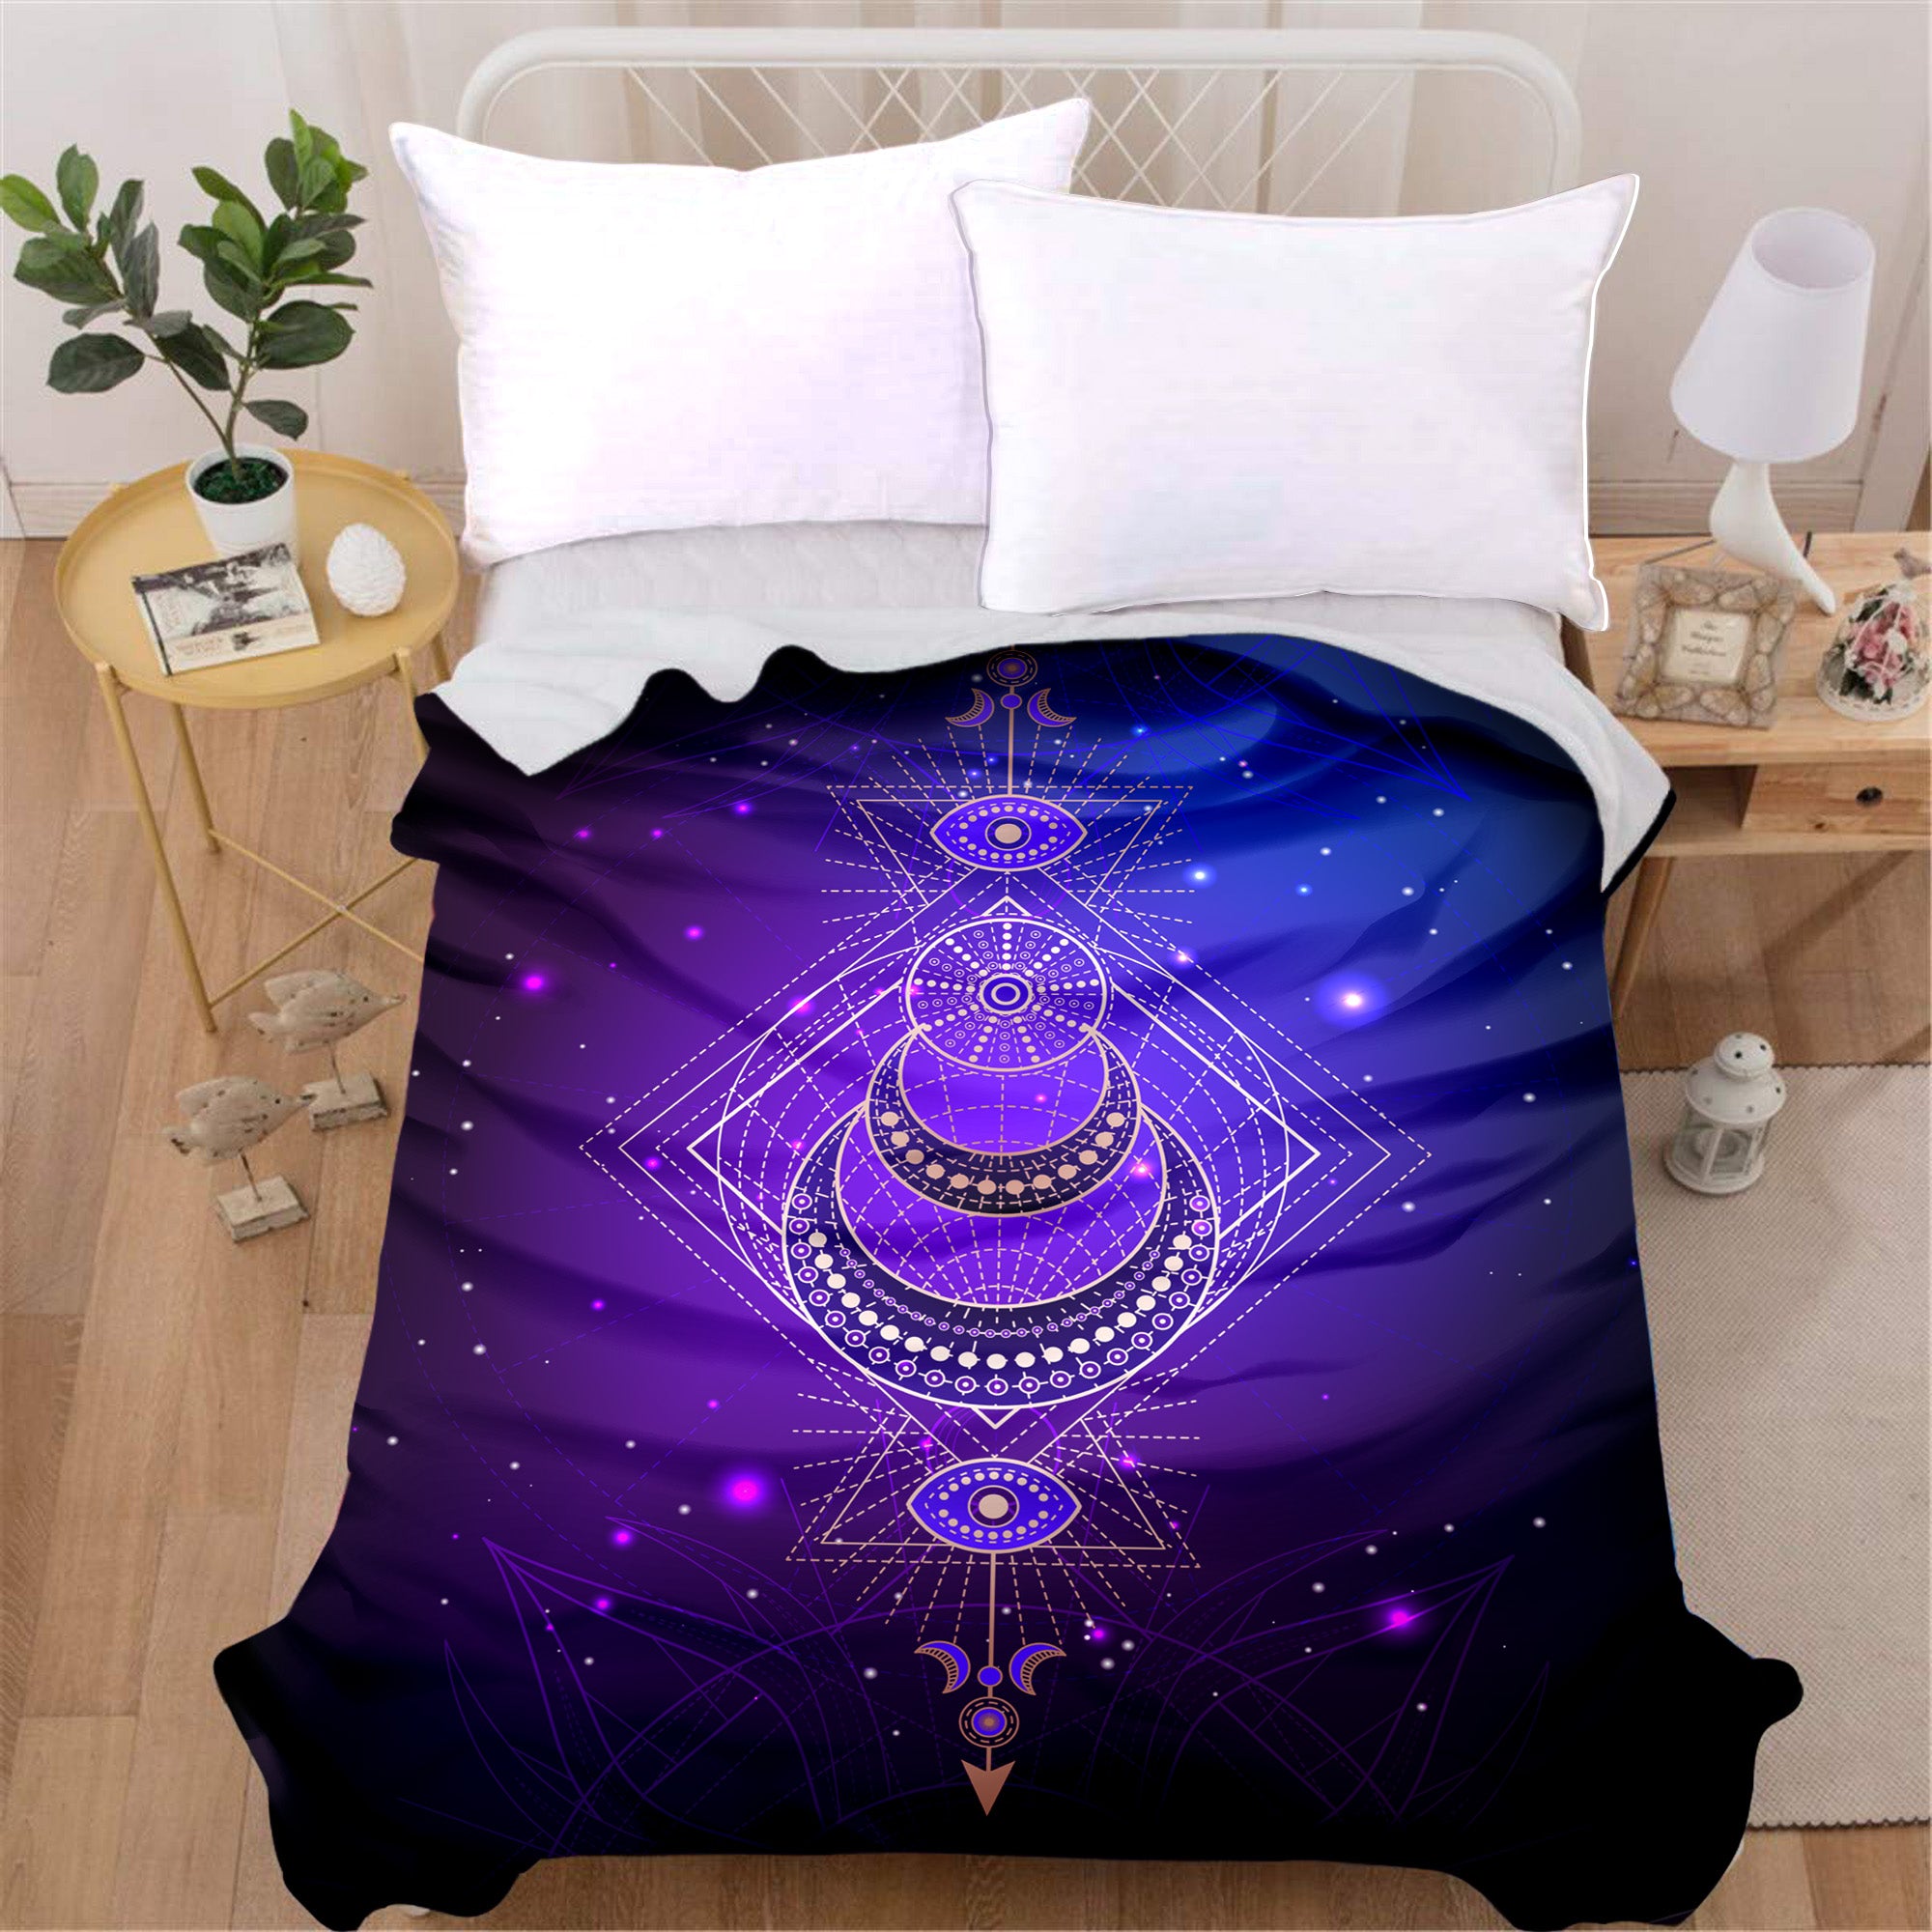 Mystic Symbols Blanket